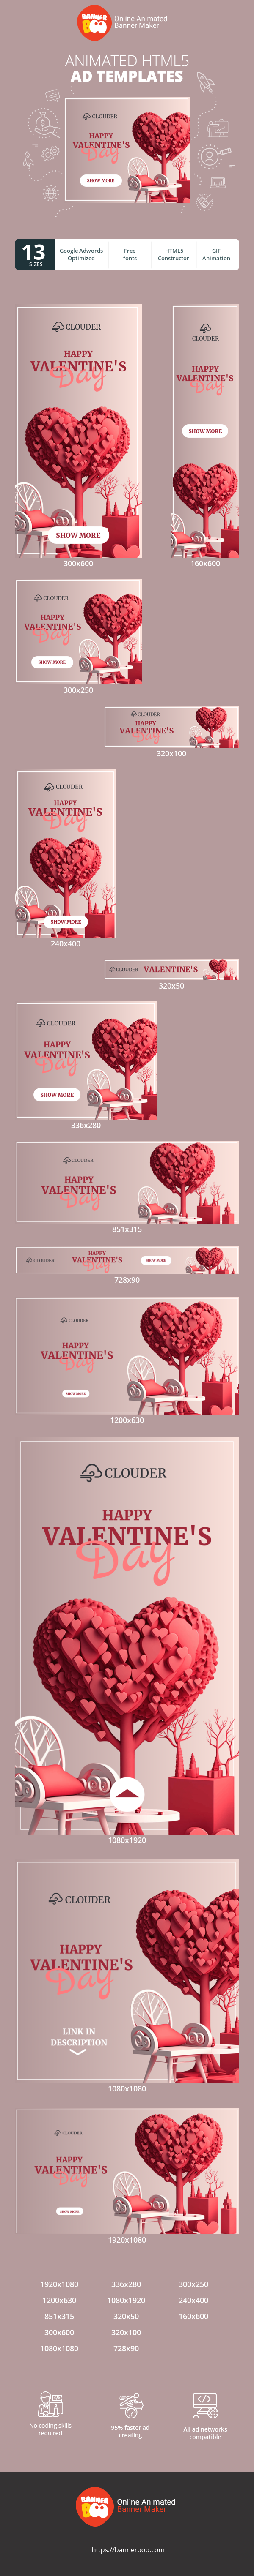 Banner ad template — Happy Valentine's Day — Valentine's day